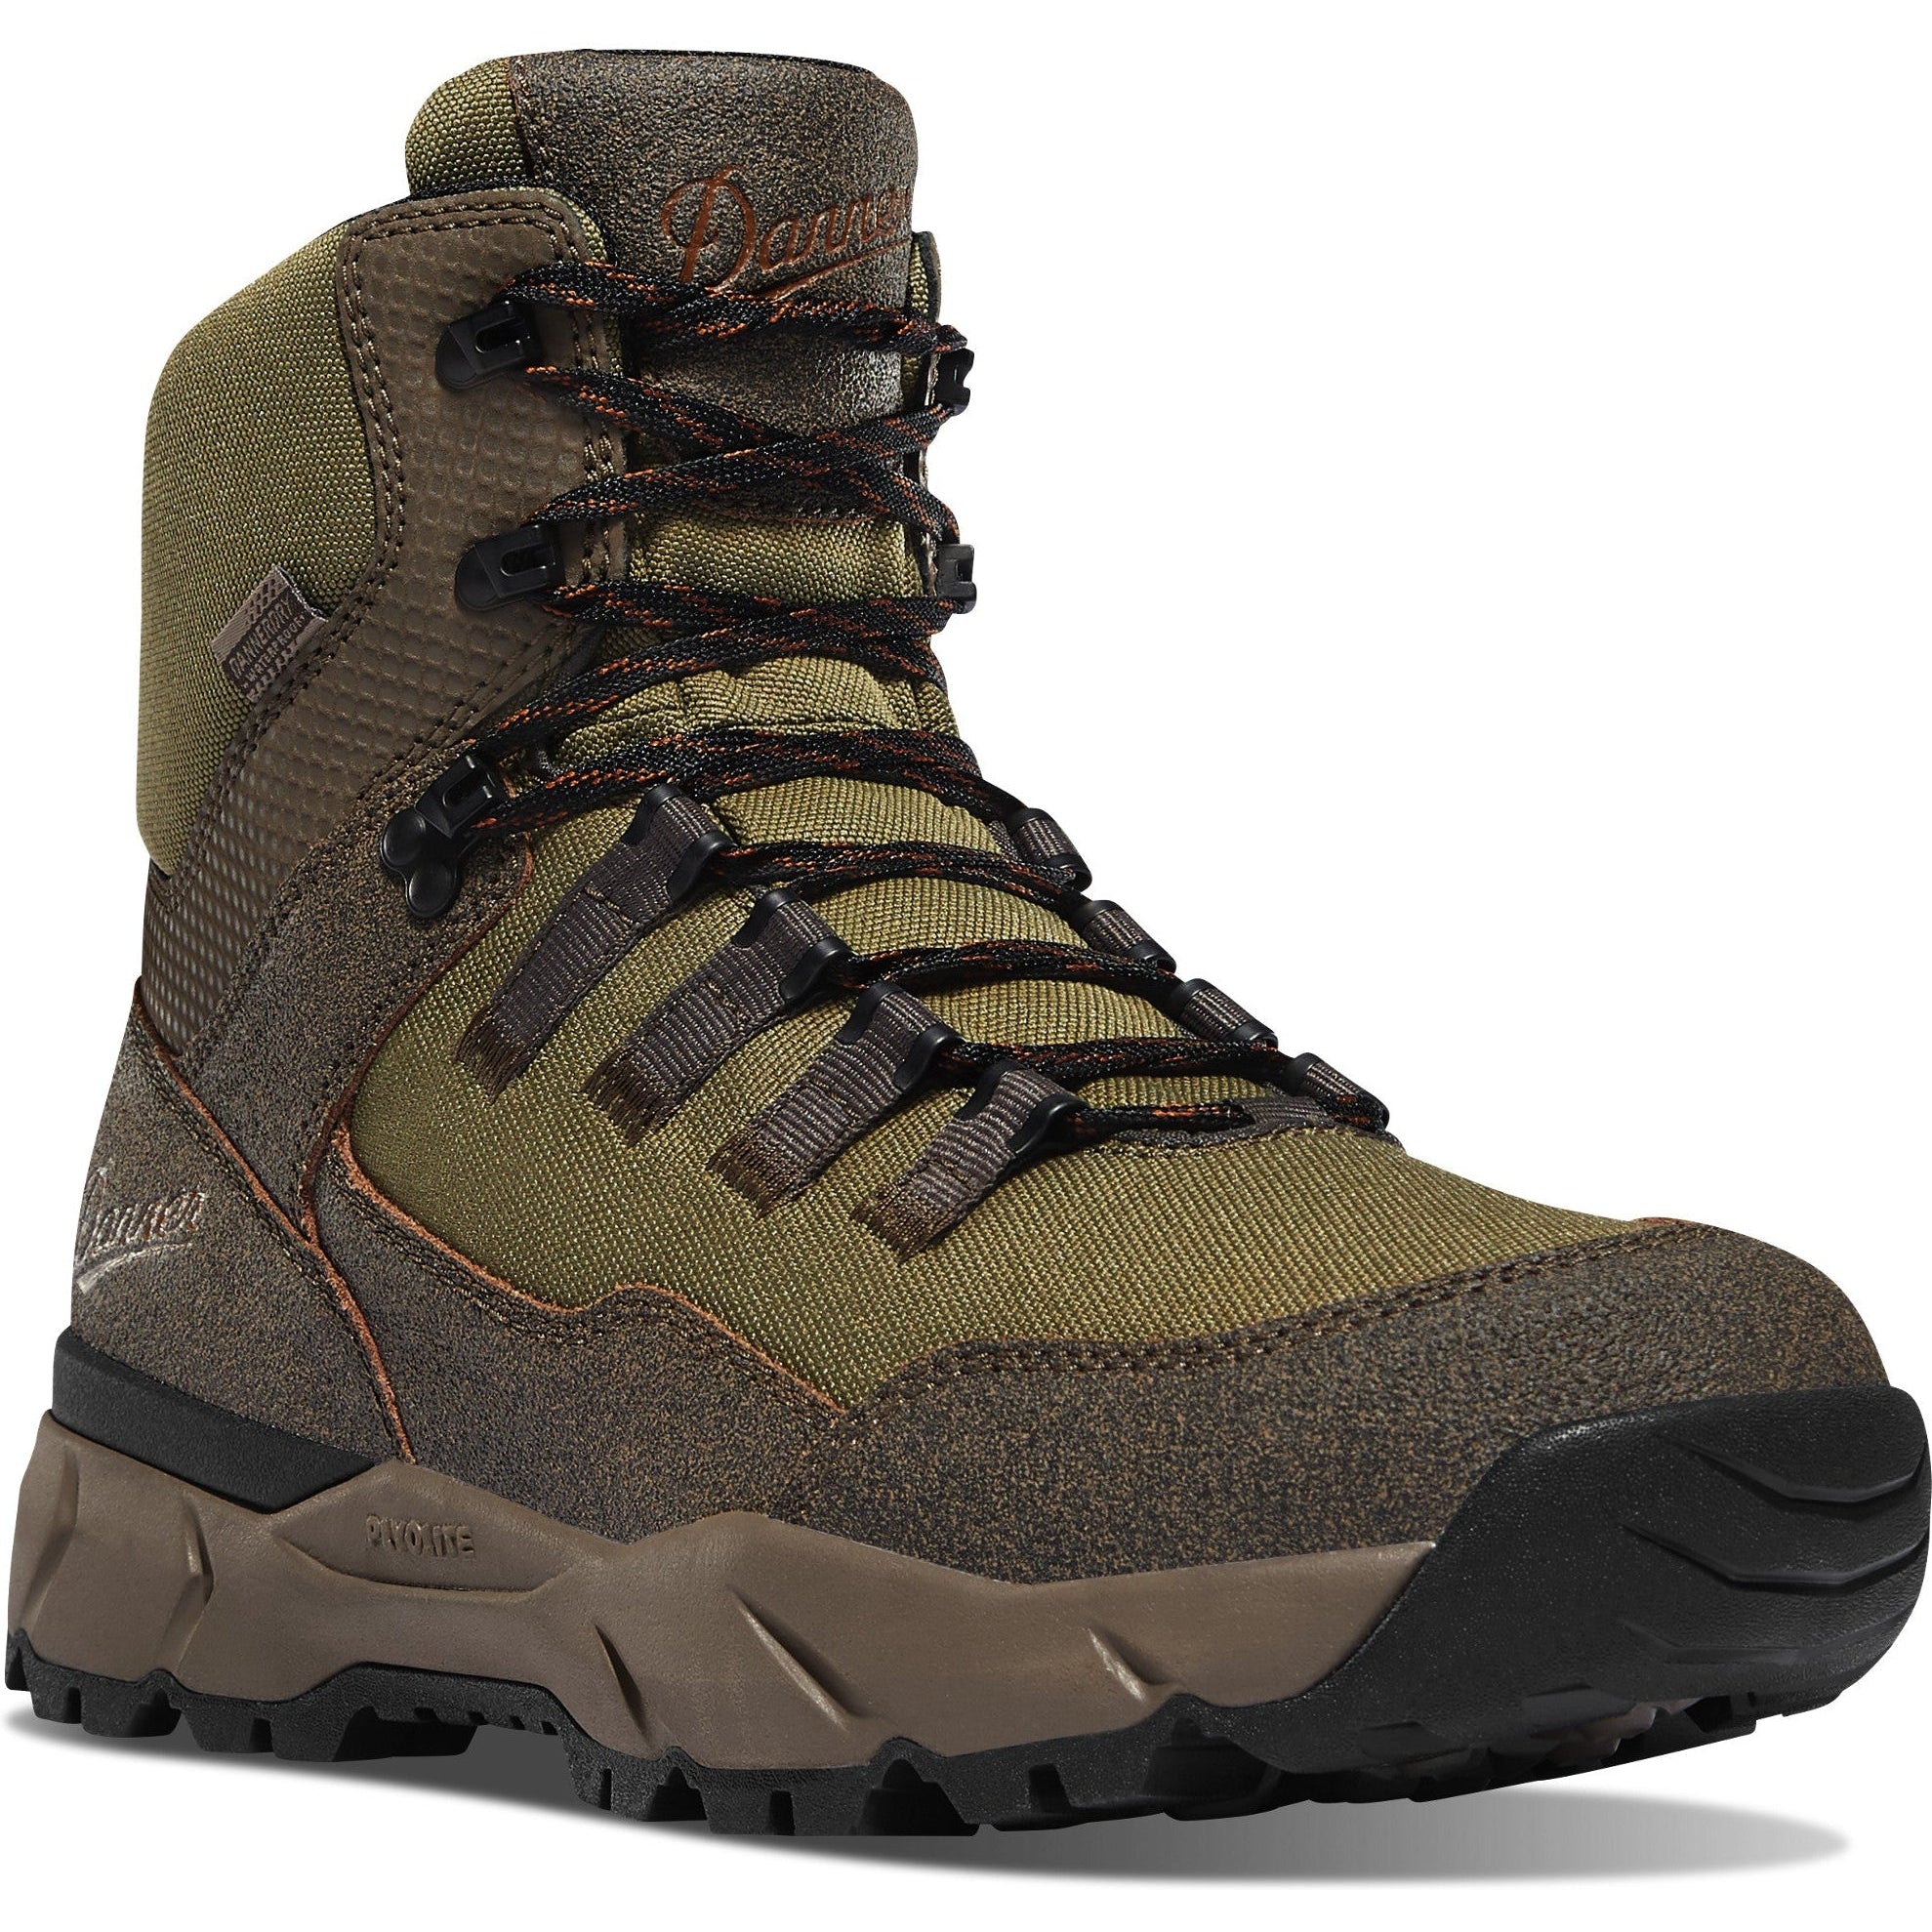 Danner Men's Vital Trail 6" WP Hiking Boot - Brown/Olive - 65301 7 / Medium / Brown - Overlook Boots